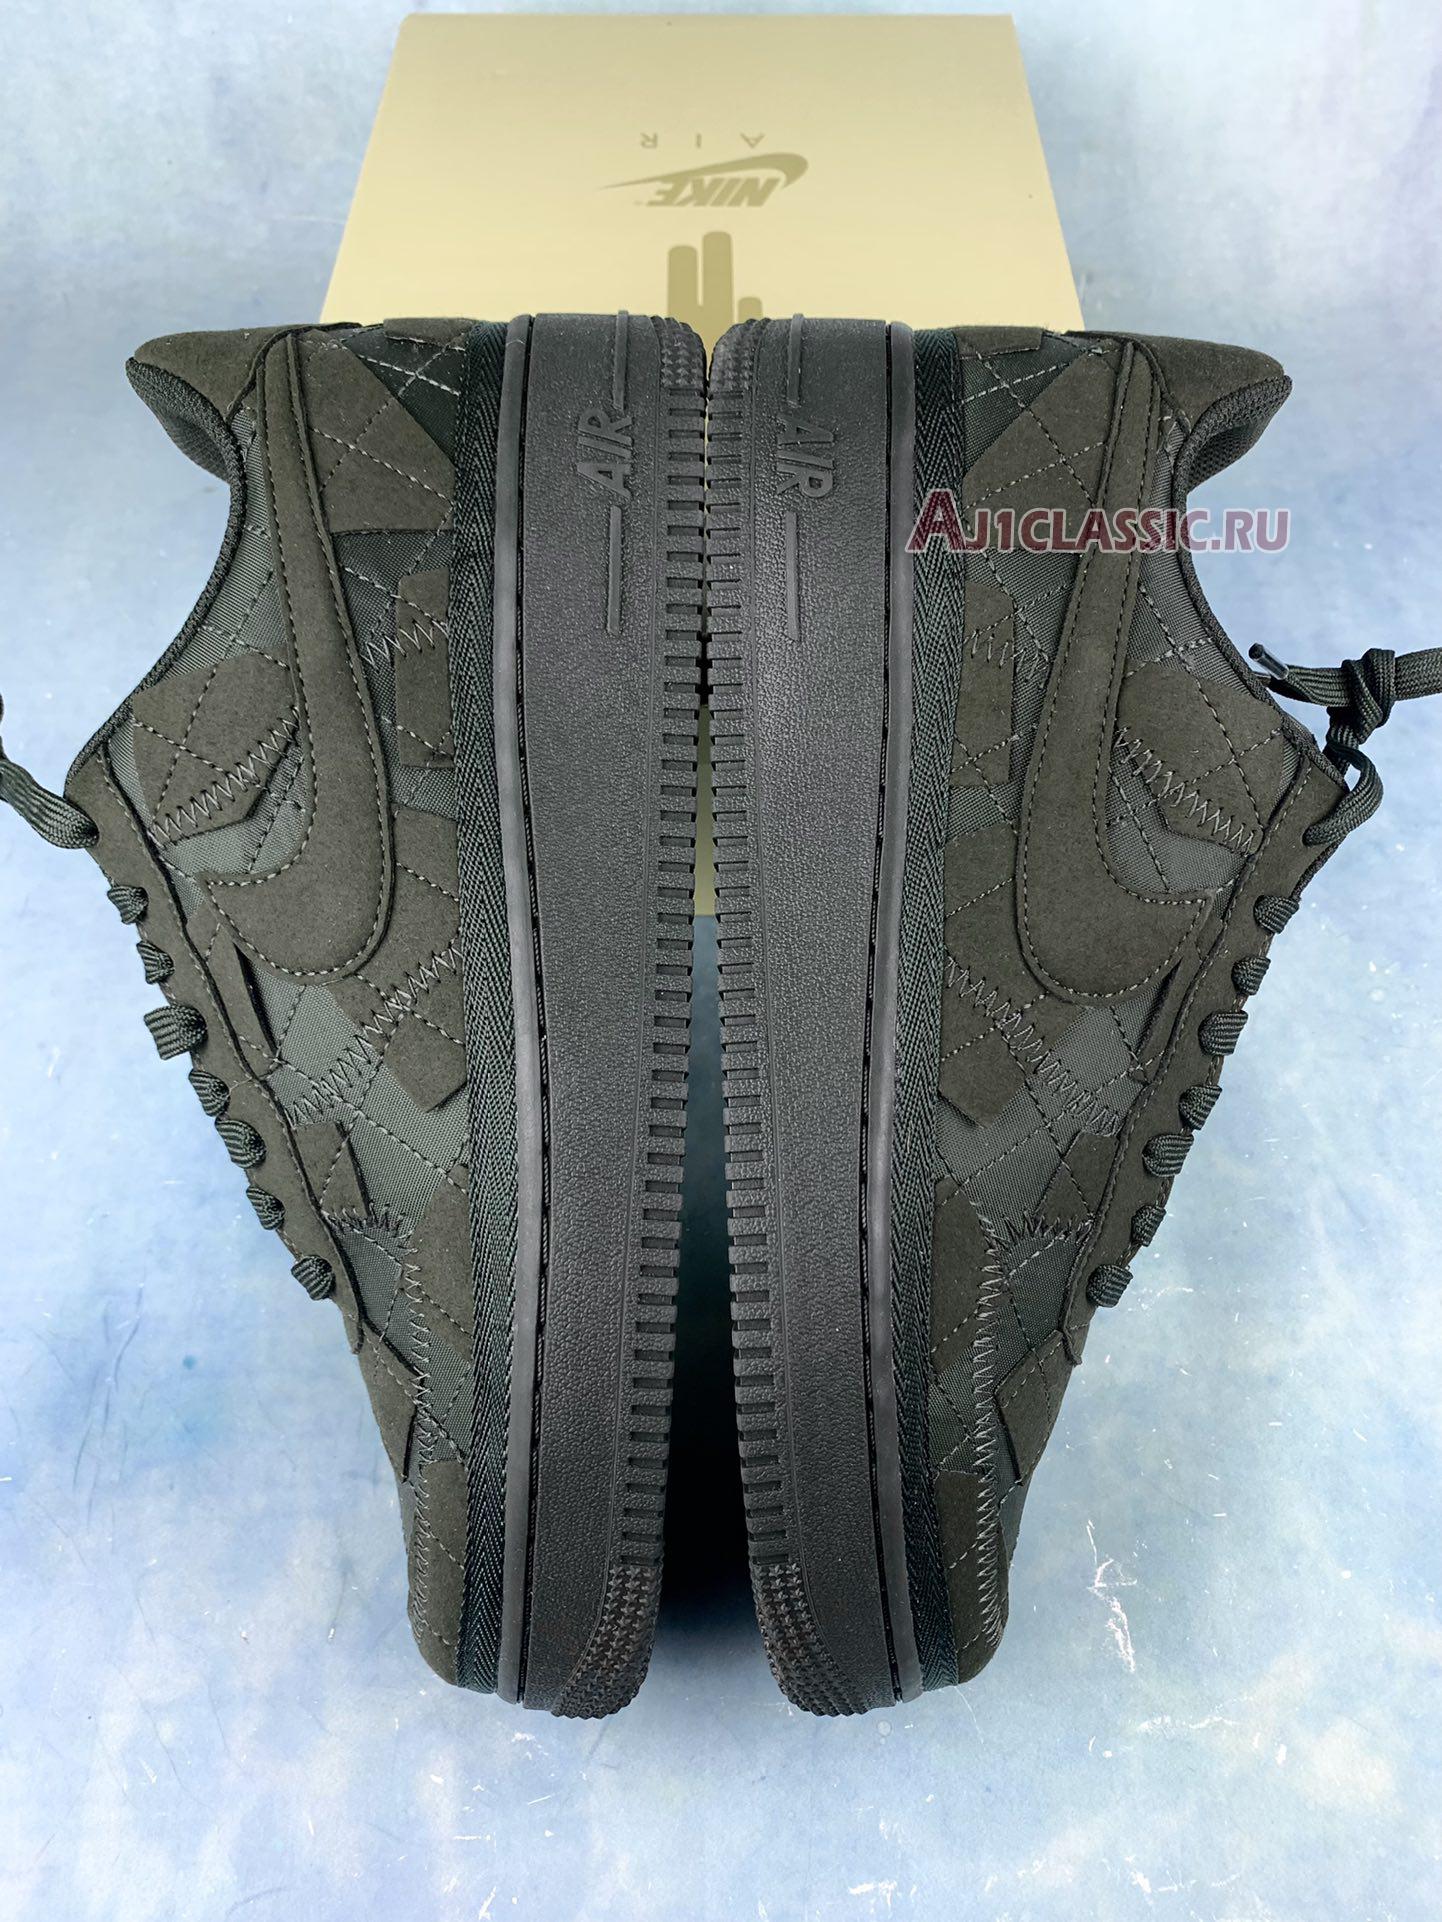 Billie Eilish x Nike Air Force 1 Low "Sequoia" DQ4137-300